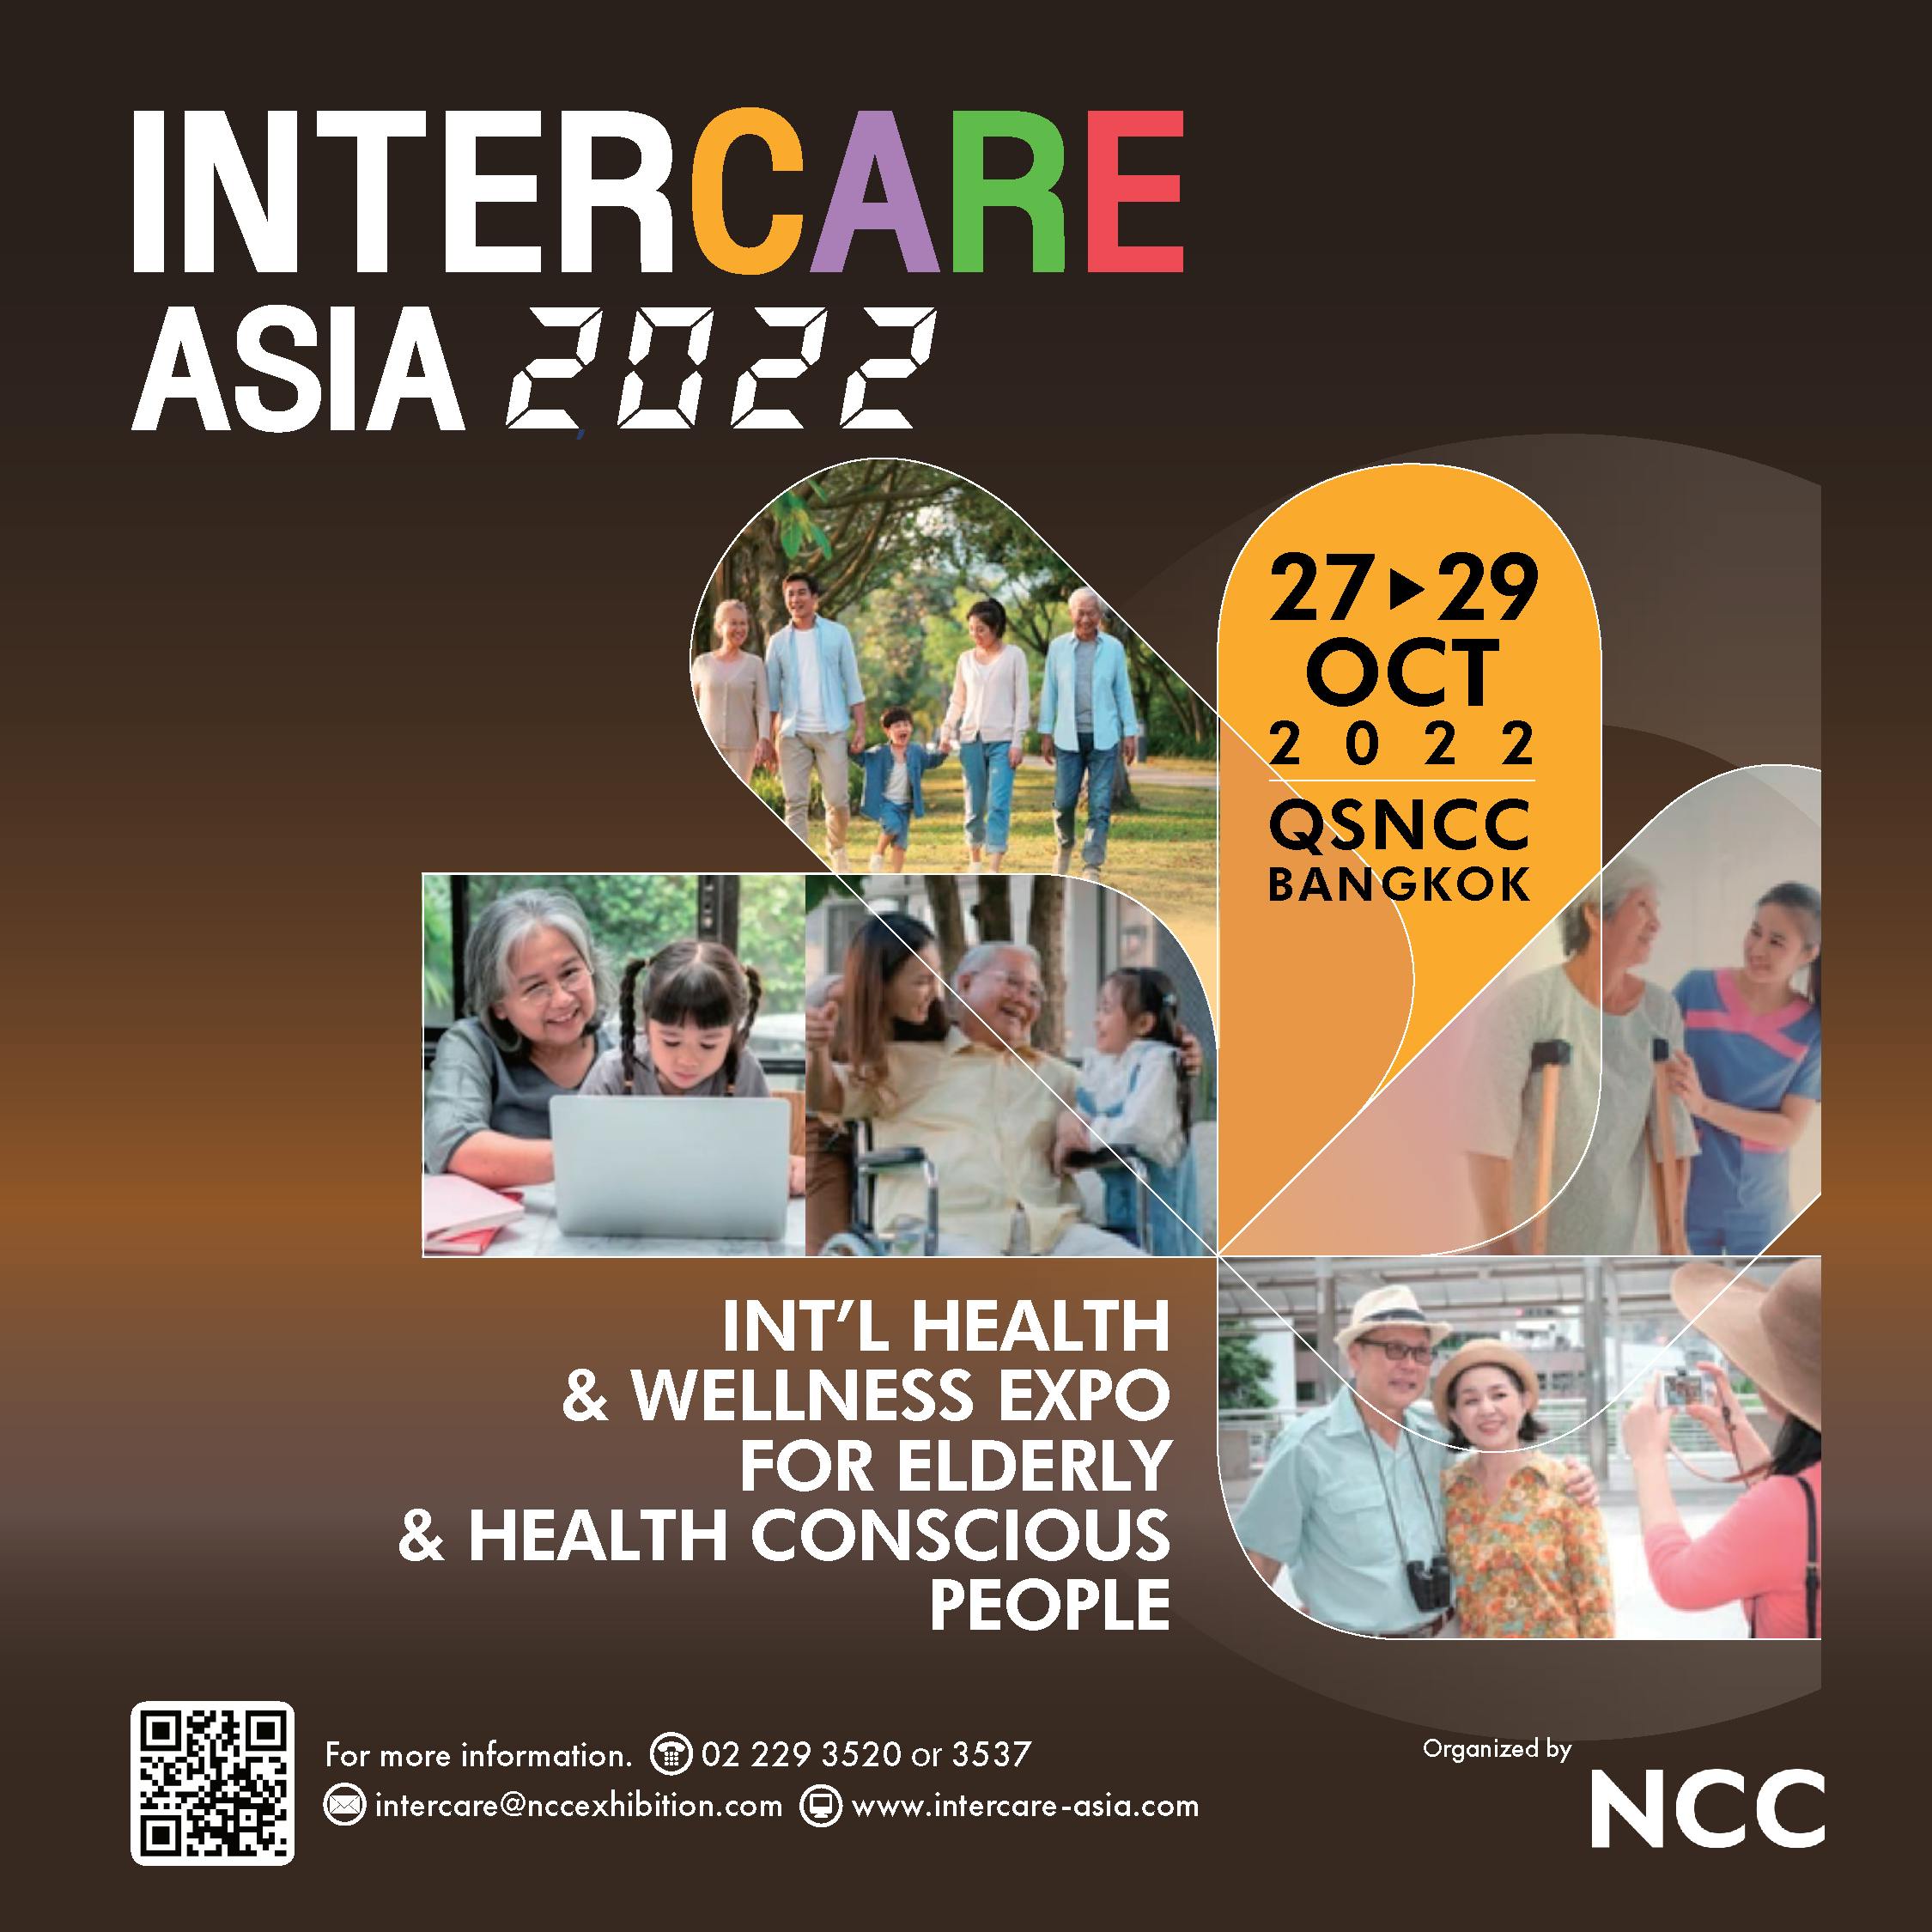 InterCare Asia 2022 - International Expo for HealthCare & Wellness